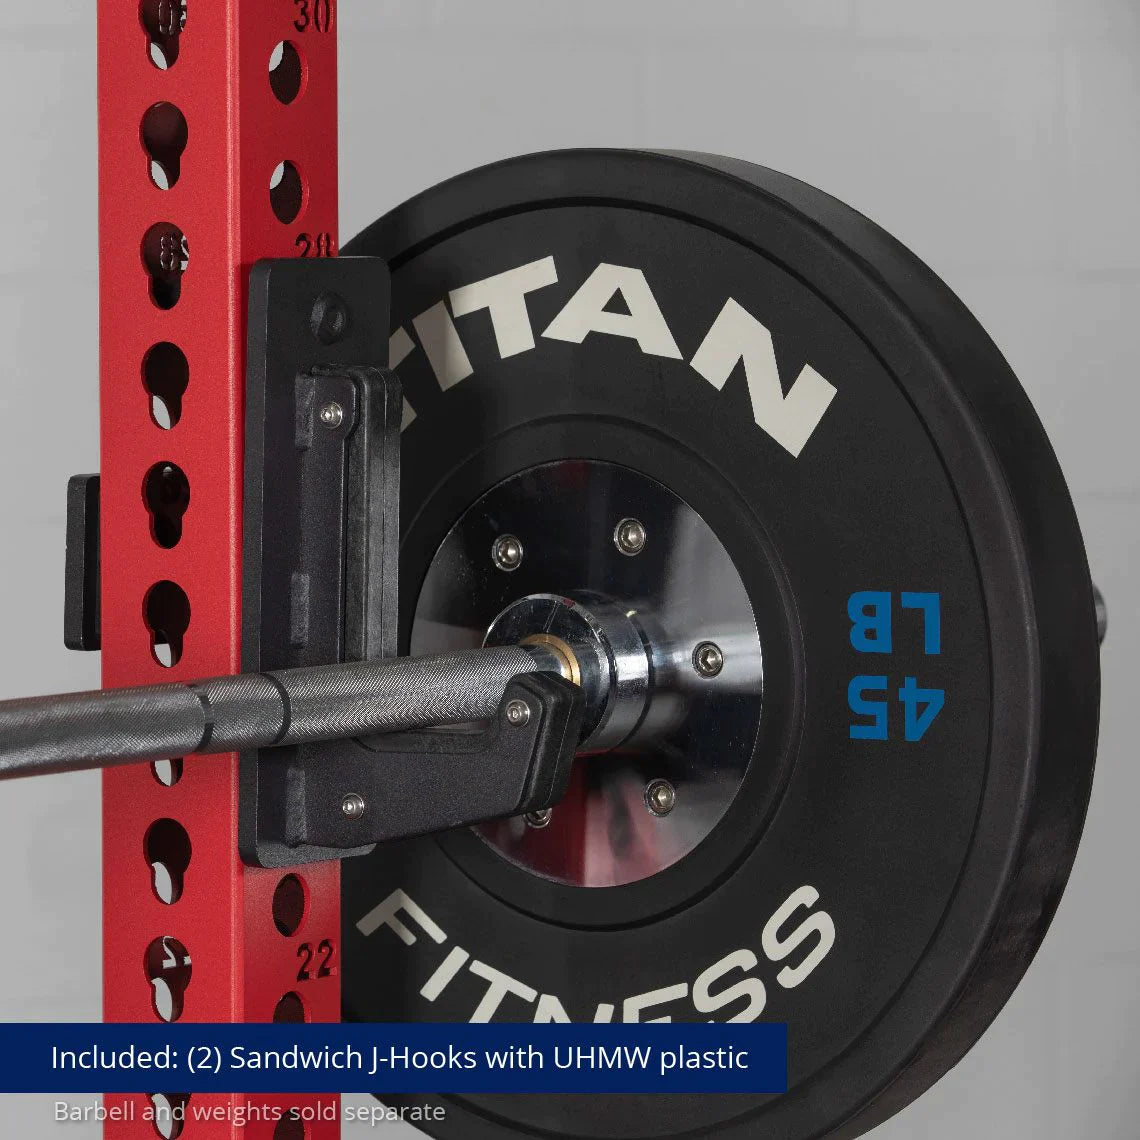 TITAN Series Power Rack 90" 42" - view 234